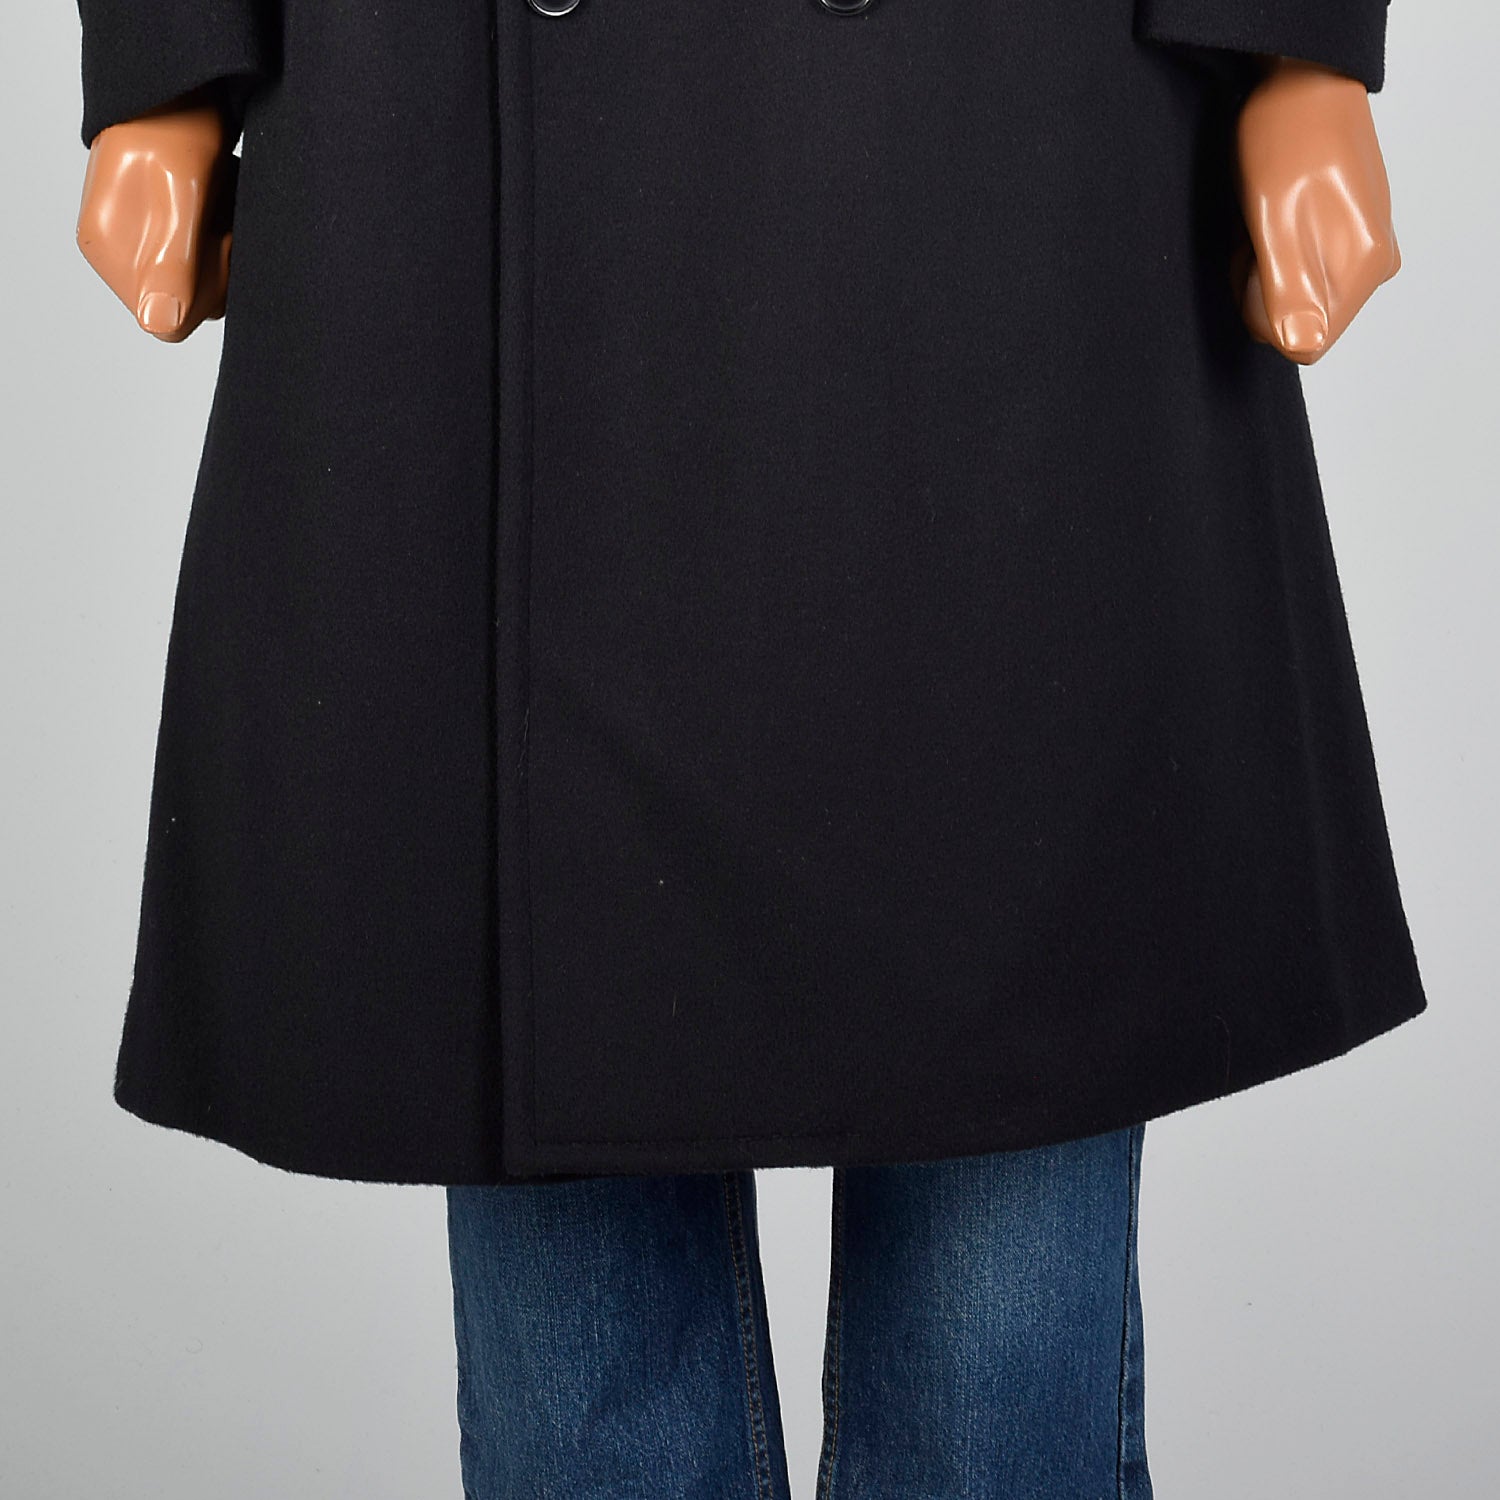 1980s Black Wool Heavy Overcoat